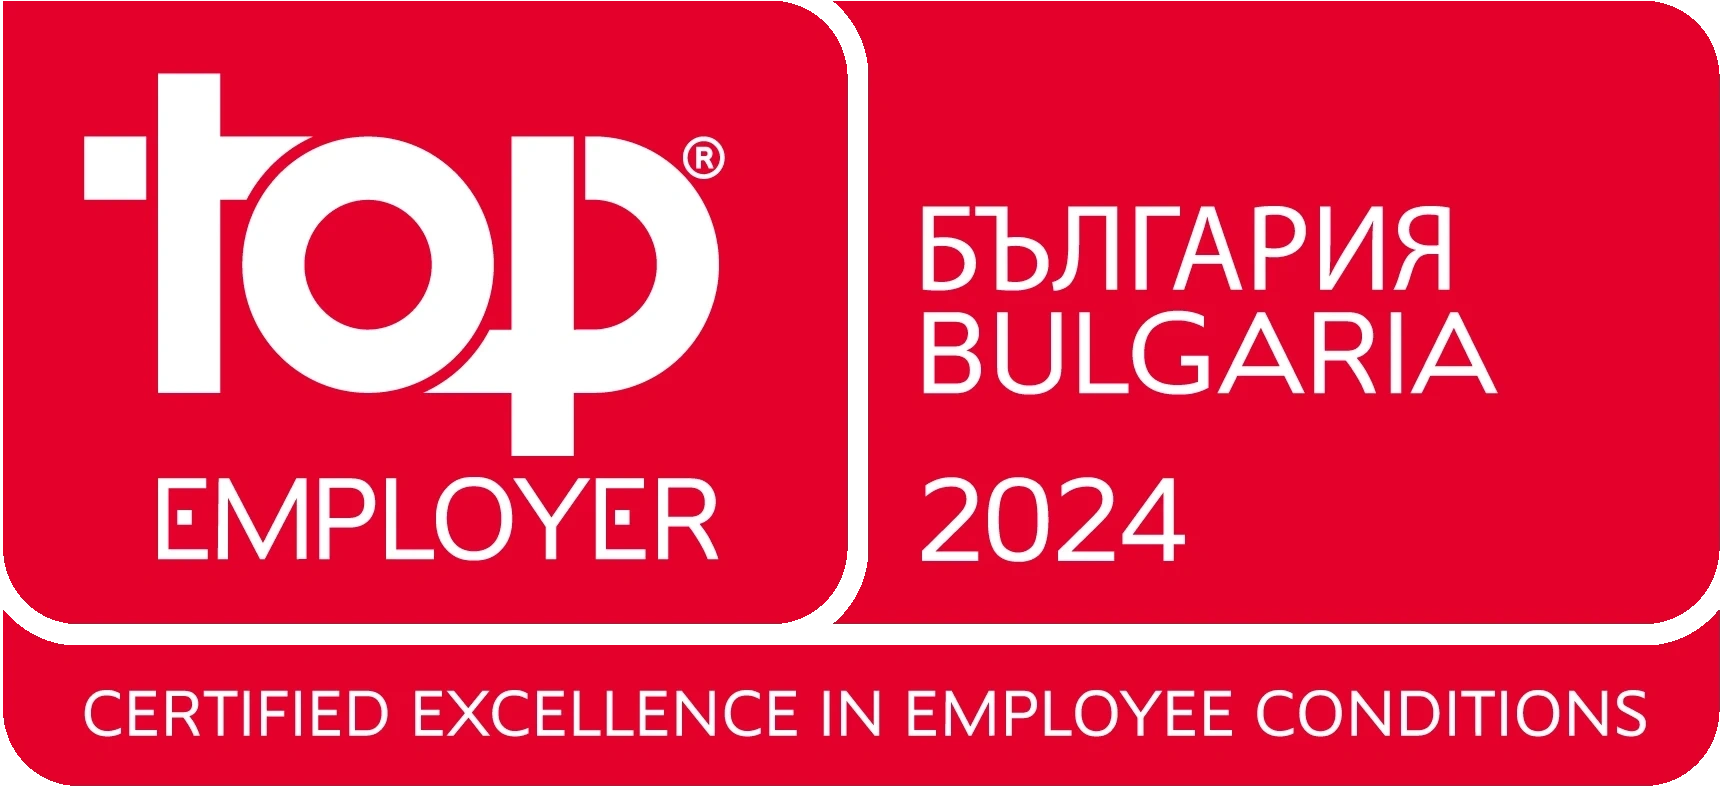 Global Top Employer #1 in Bulgaria